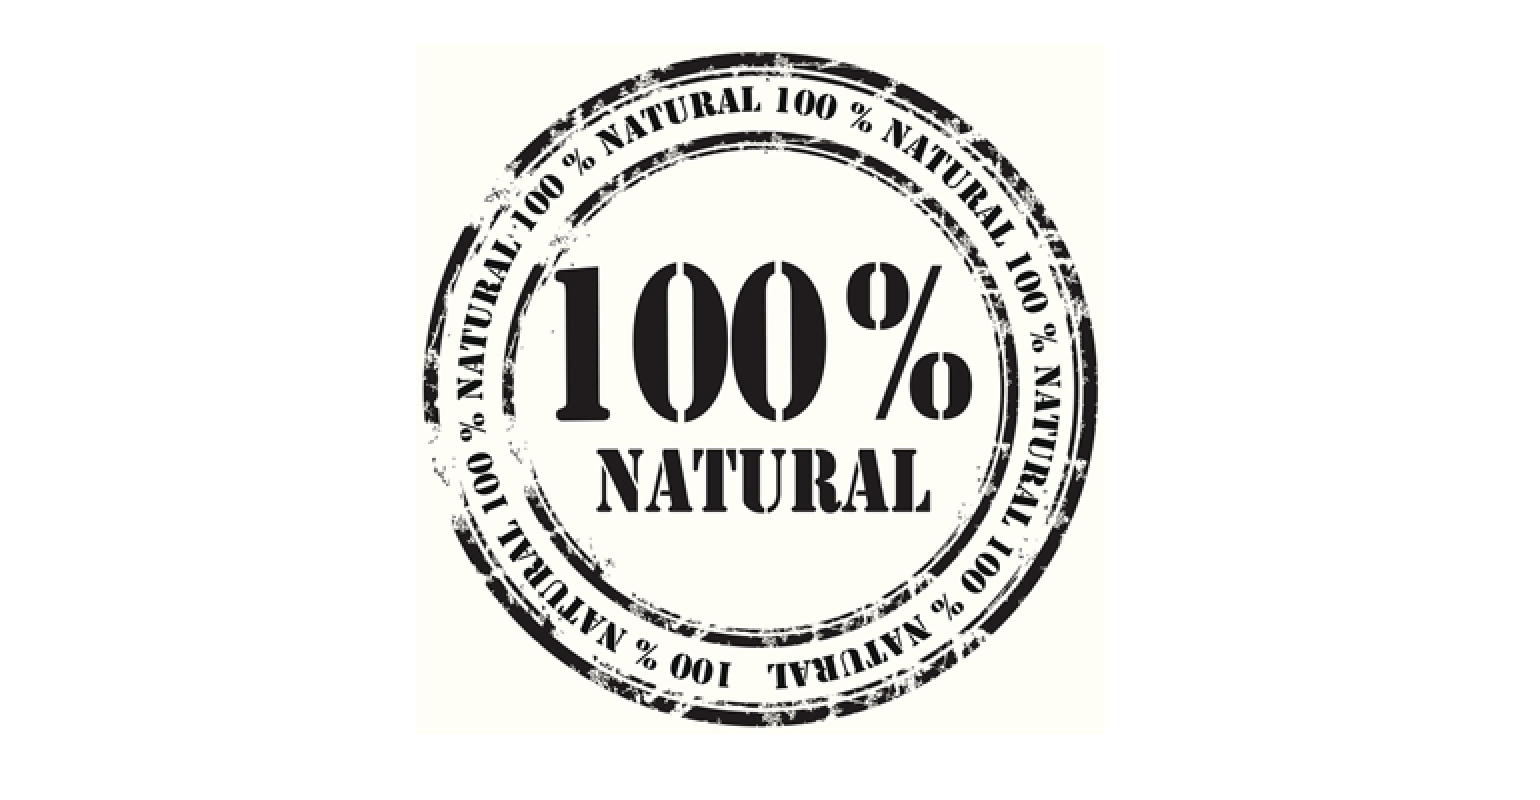 7 reasons to distrust “natural” food